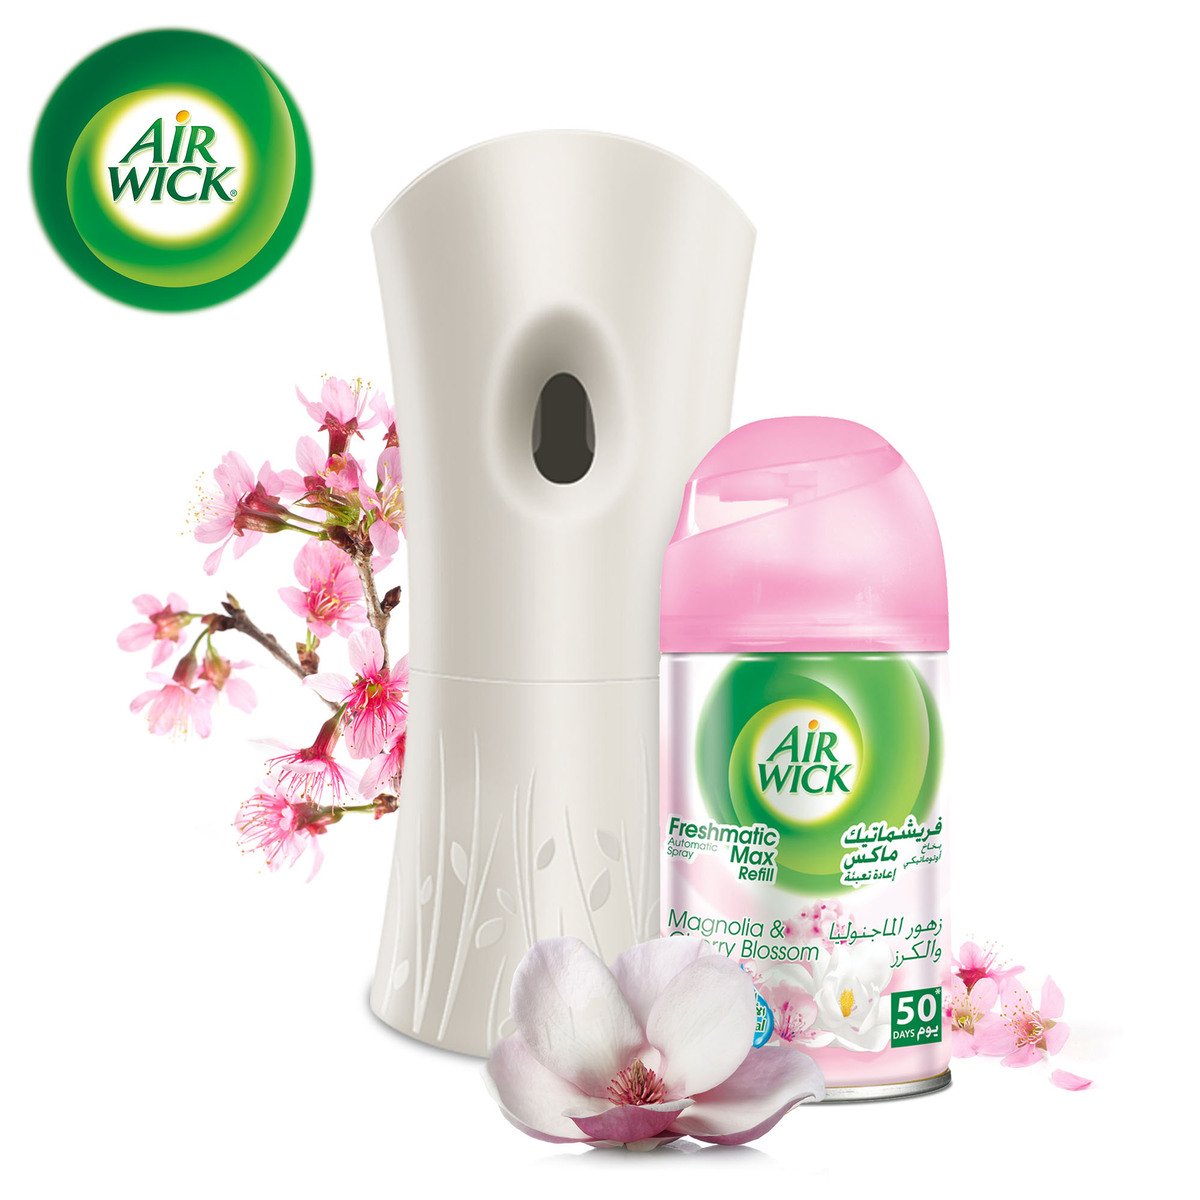 Airwick Freshmatic Autospray Refill Magnolia and Cherry Blossom 250 ml